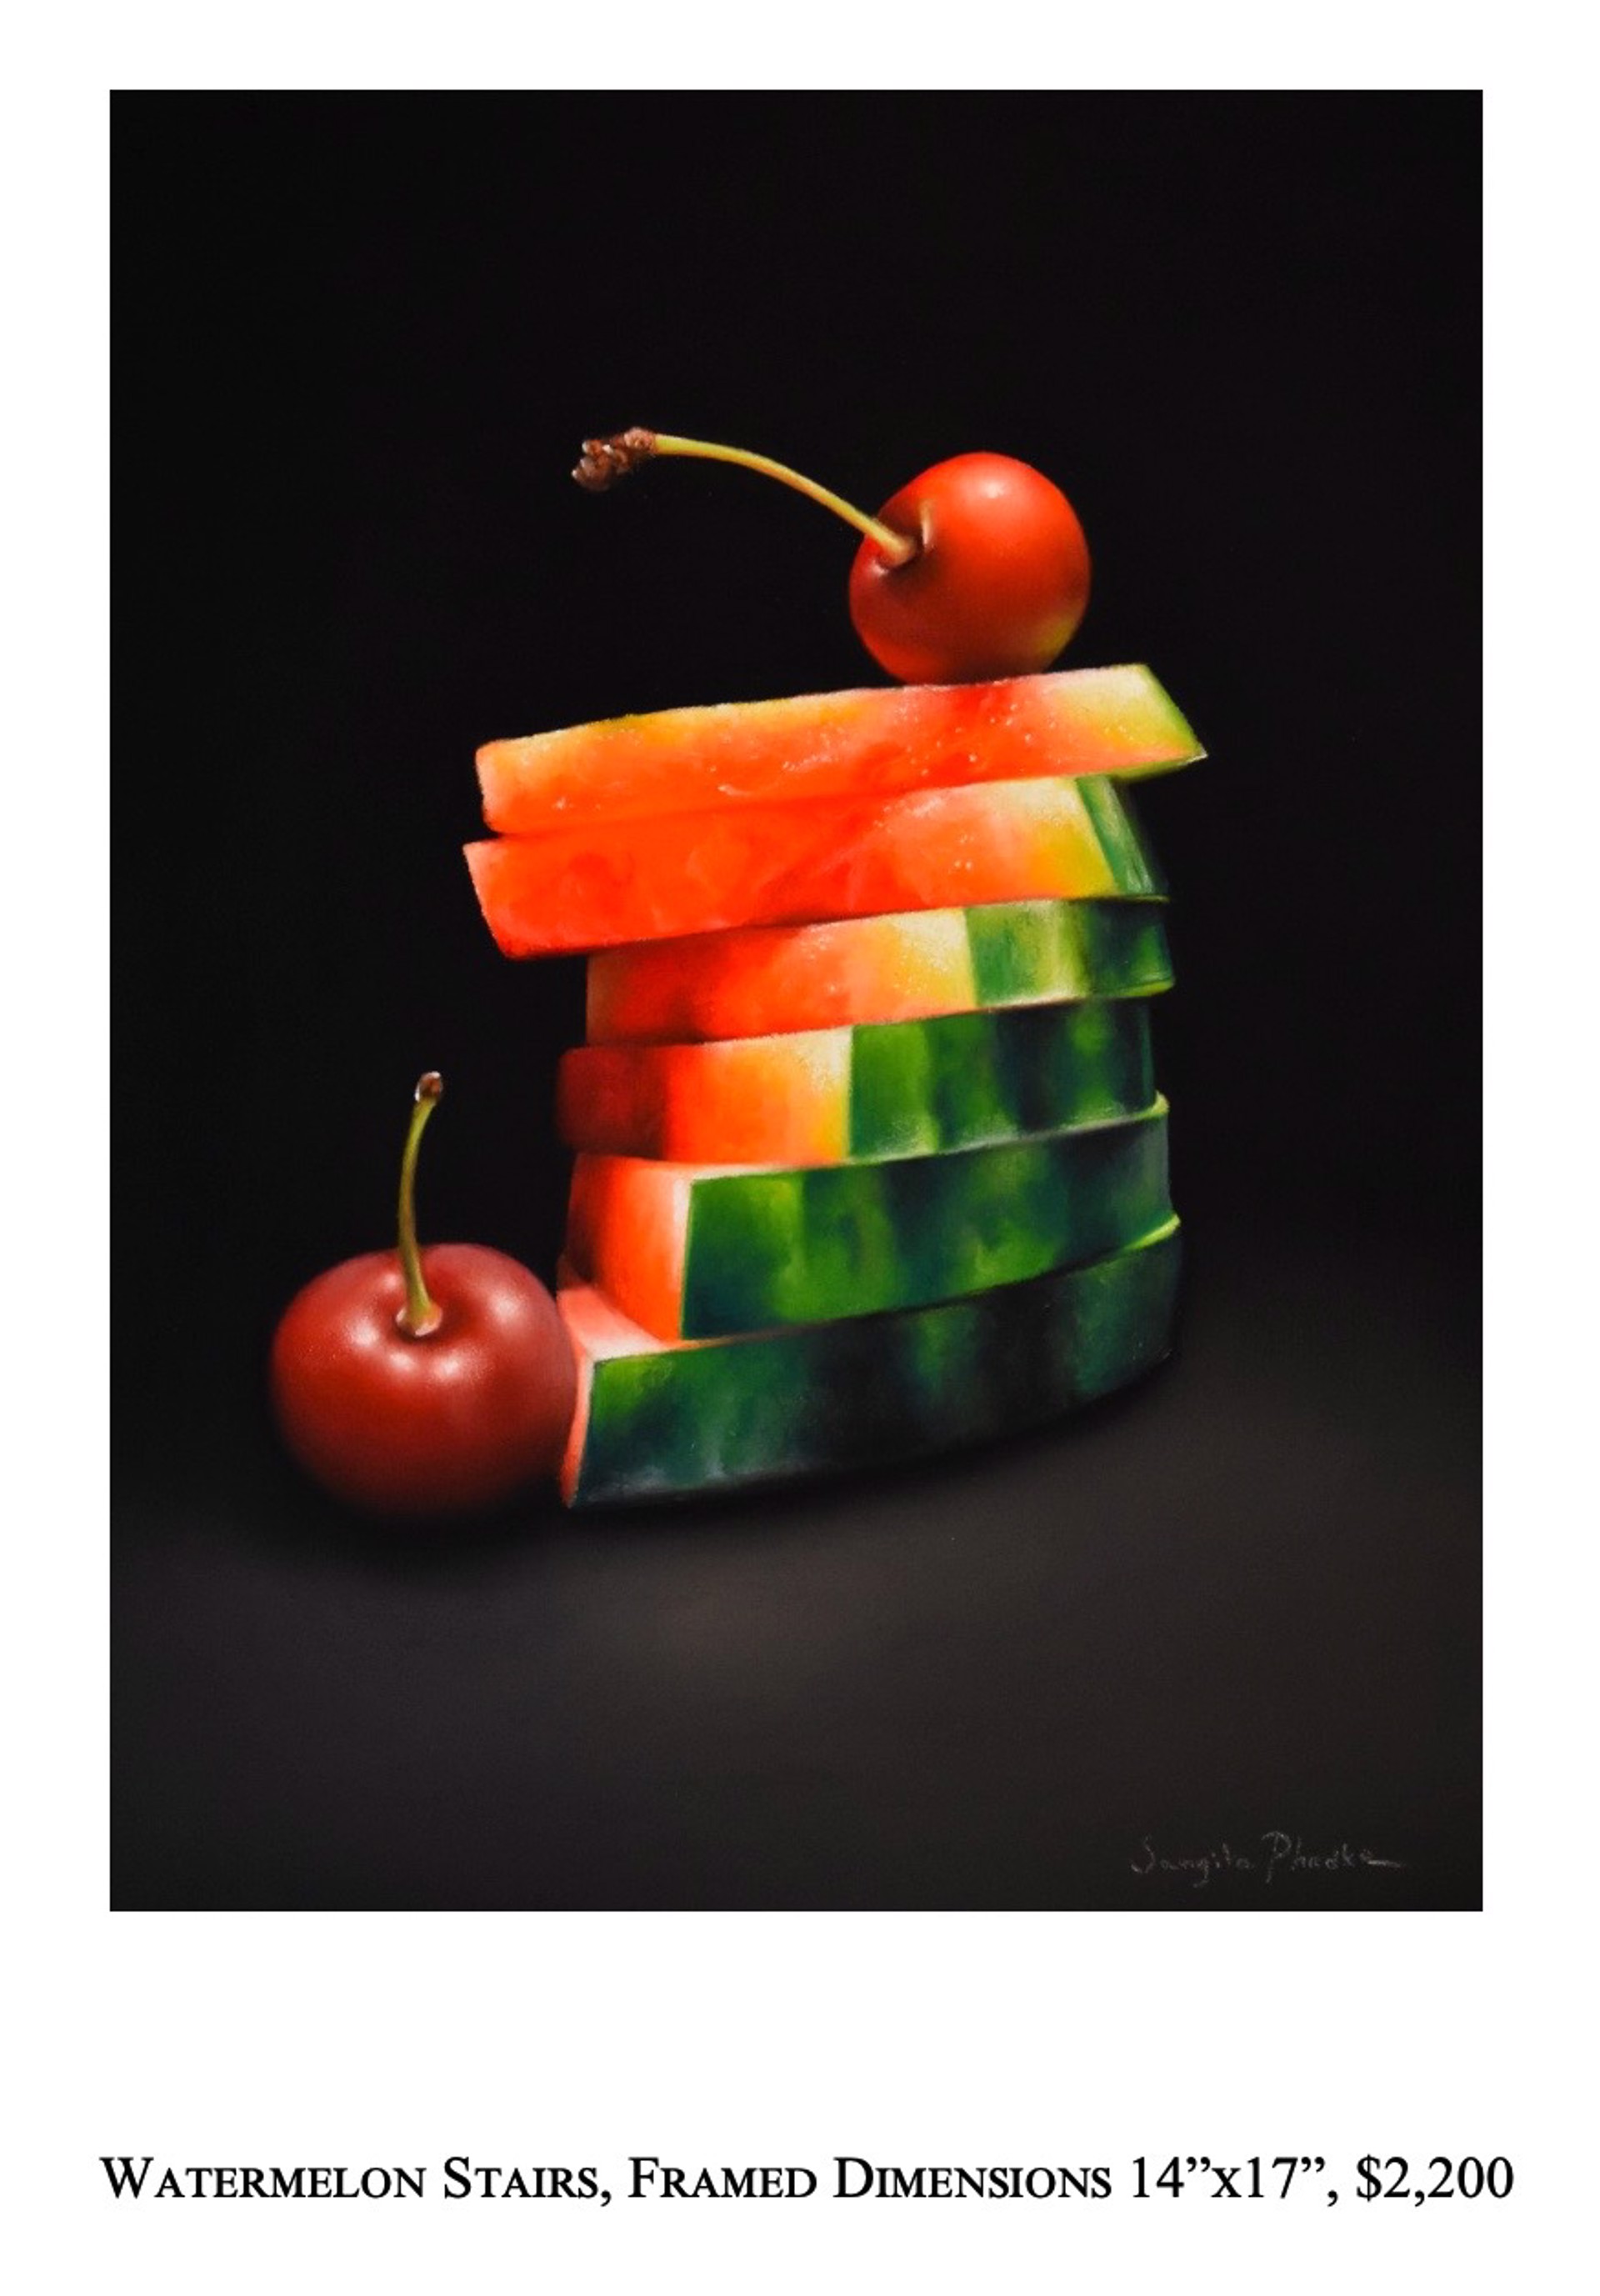 Watermelon Stairs (17" x 14" Framed Dimensions) by Sangita Phadke